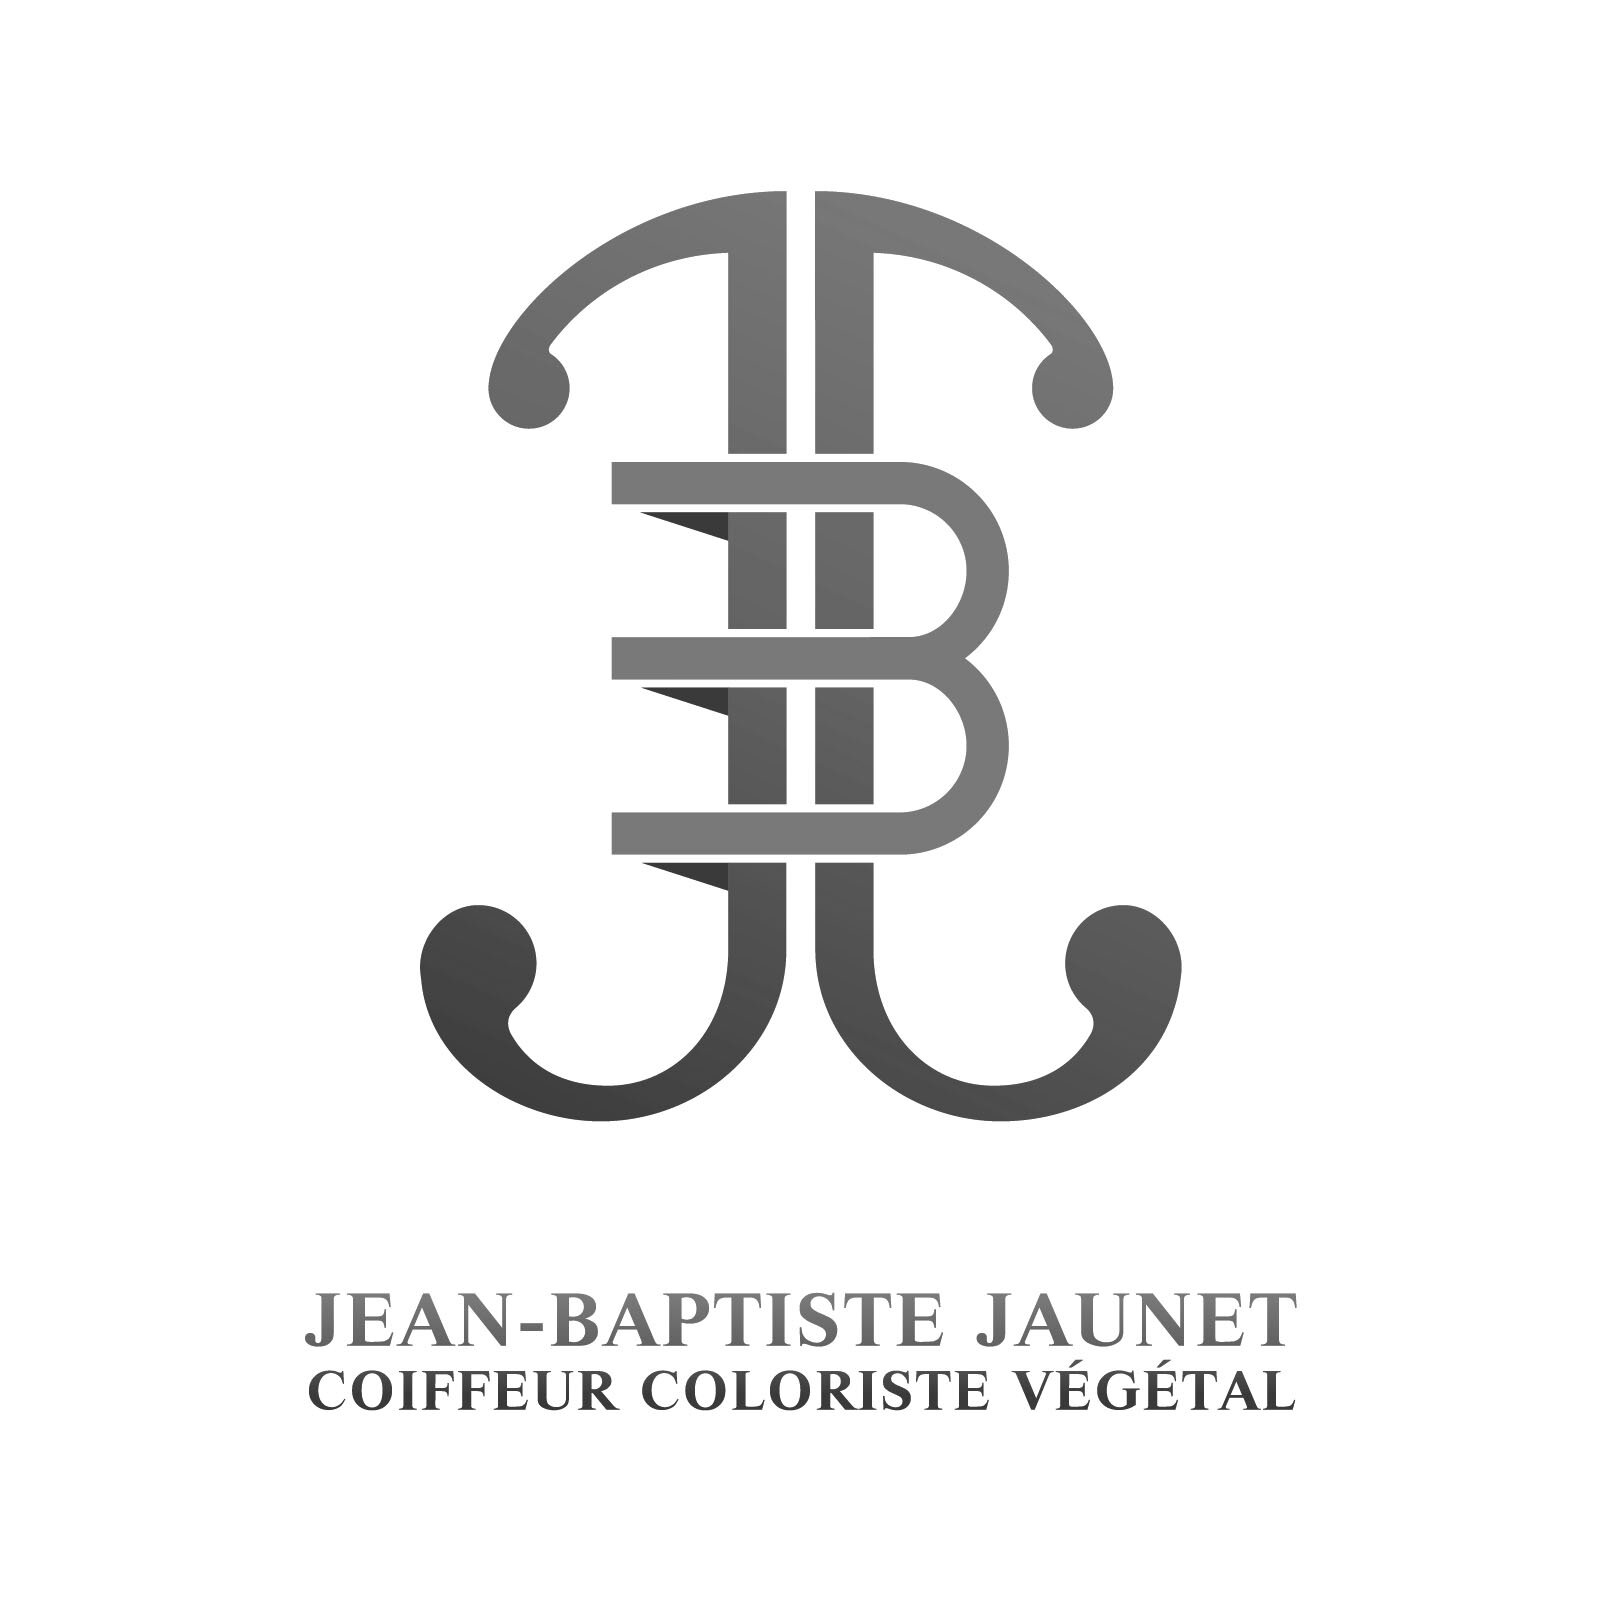 Jean-Baptiste Jaunet